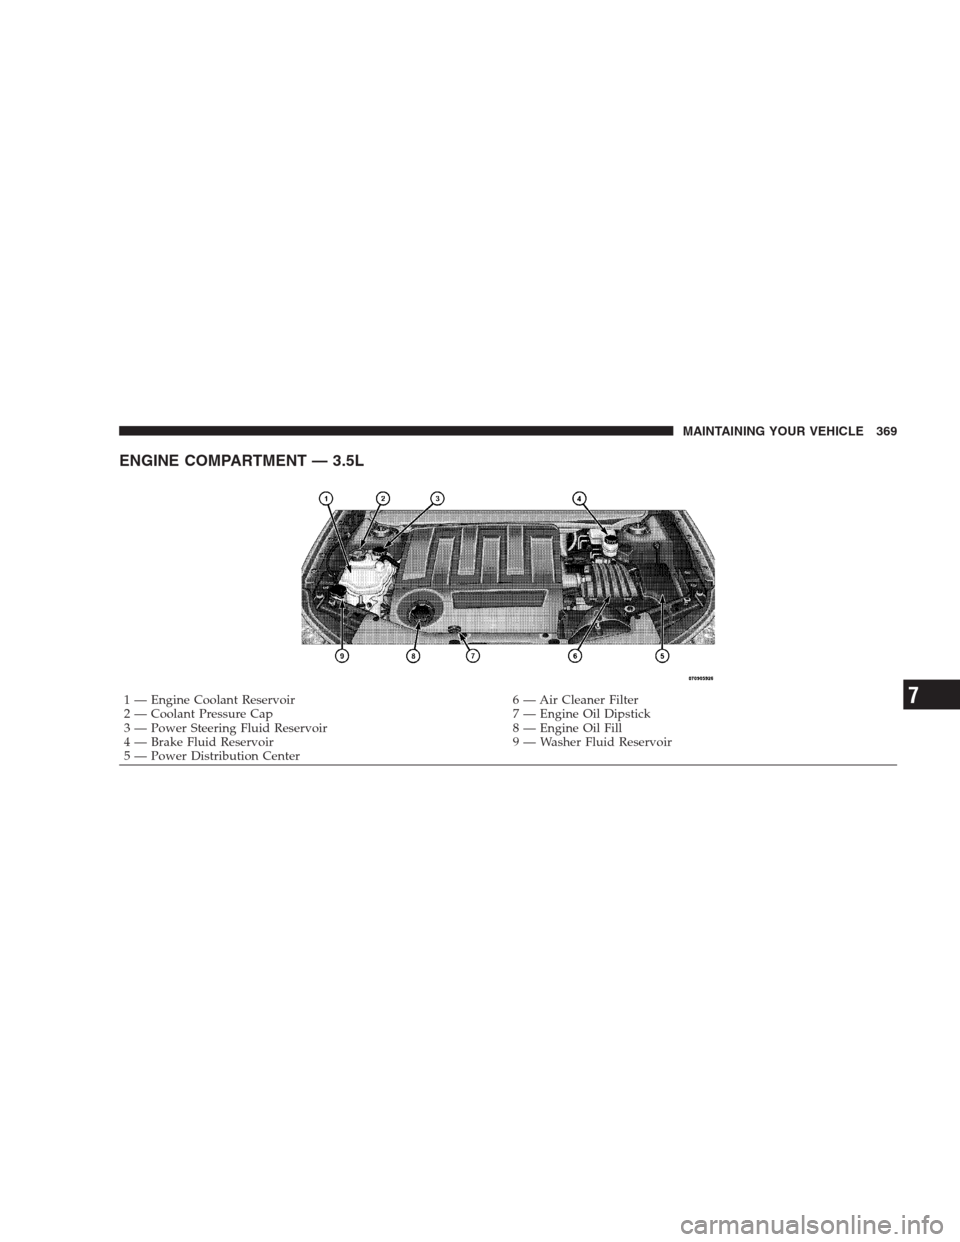 DODGE AVENGER 2009 2.G Owners Manual ENGINE COMPARTMENT — 3.5L
1 — Engine Coolant Reservoir 6 — Air Cleaner Filter
2 — Coolant Pressure Cap 7 — Engine Oil Dipstick
3 — Power Steering Fluid Reservoir 8 — Engine Oil Fill
4 �